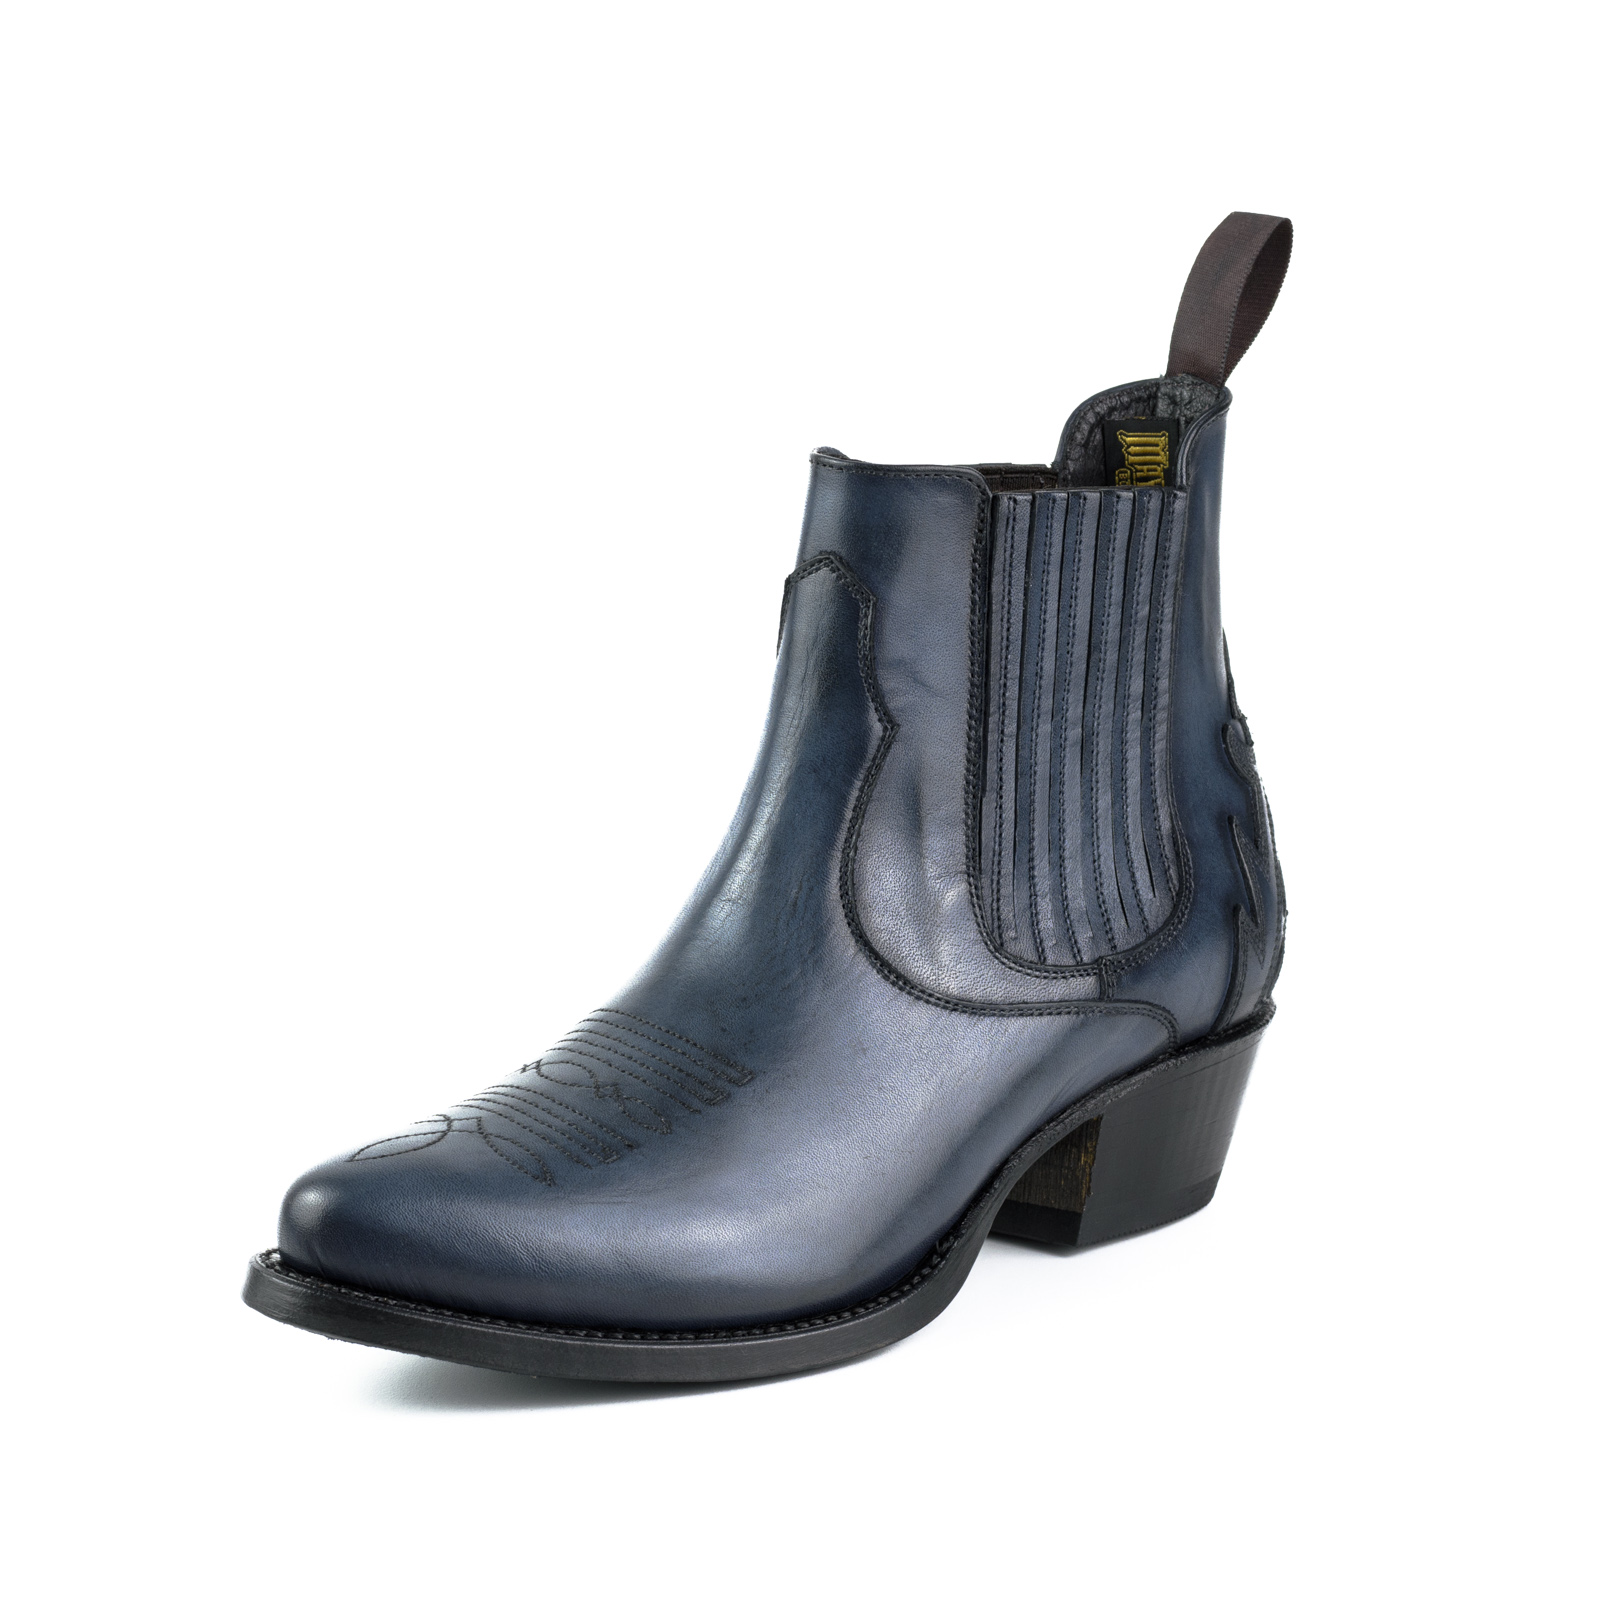 mayura-boots-modelo-marilyn-2487-azul85-1